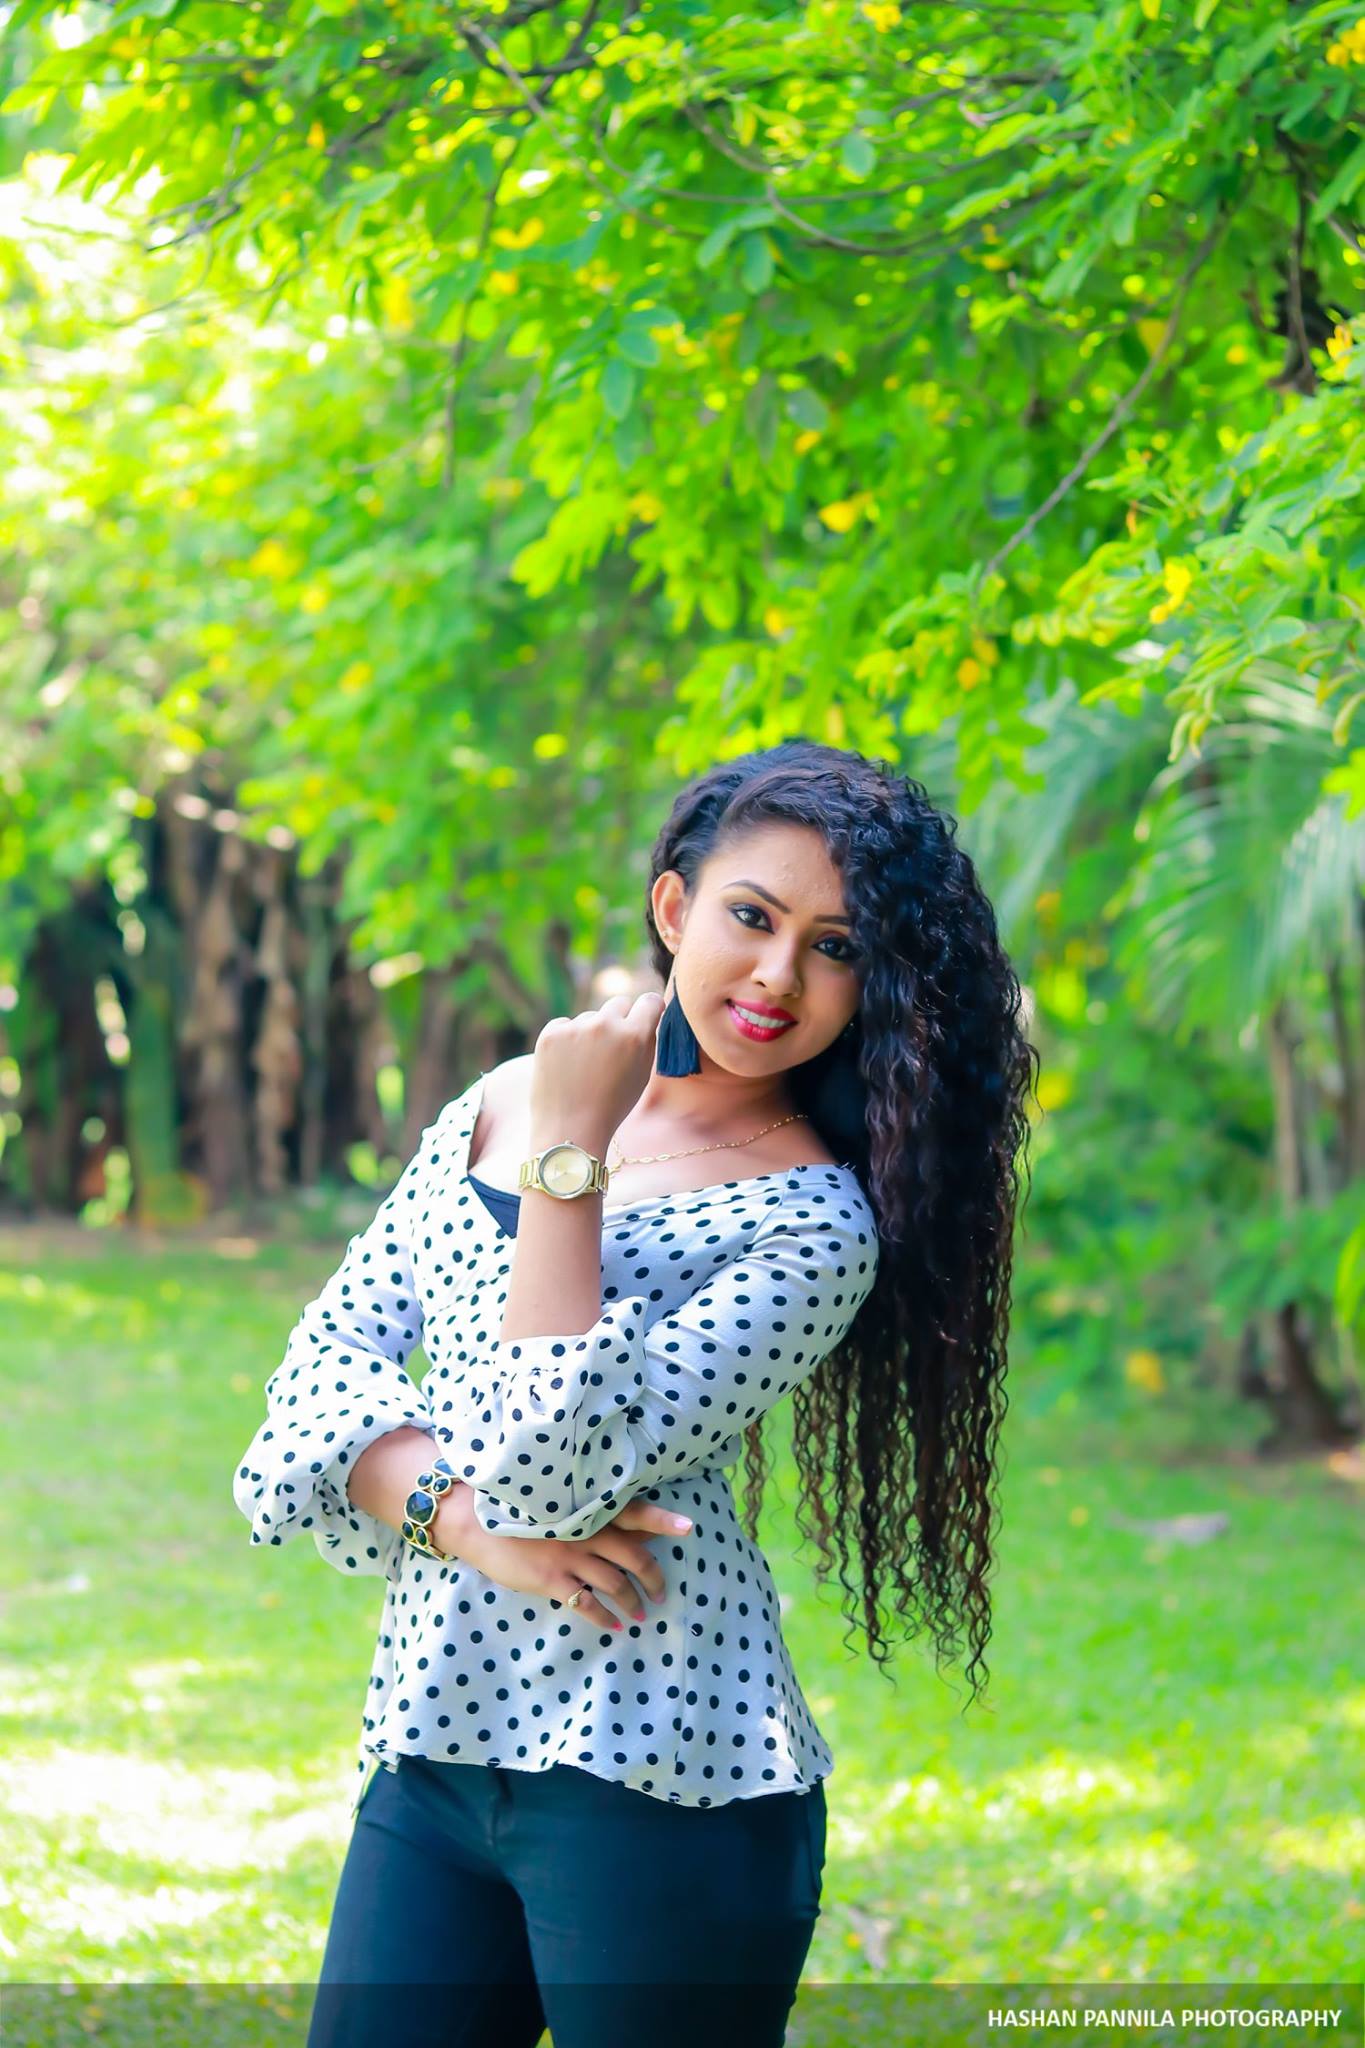 5 Reasons You Should Fall In Love With Amadhi Upeksha Deeneththi.